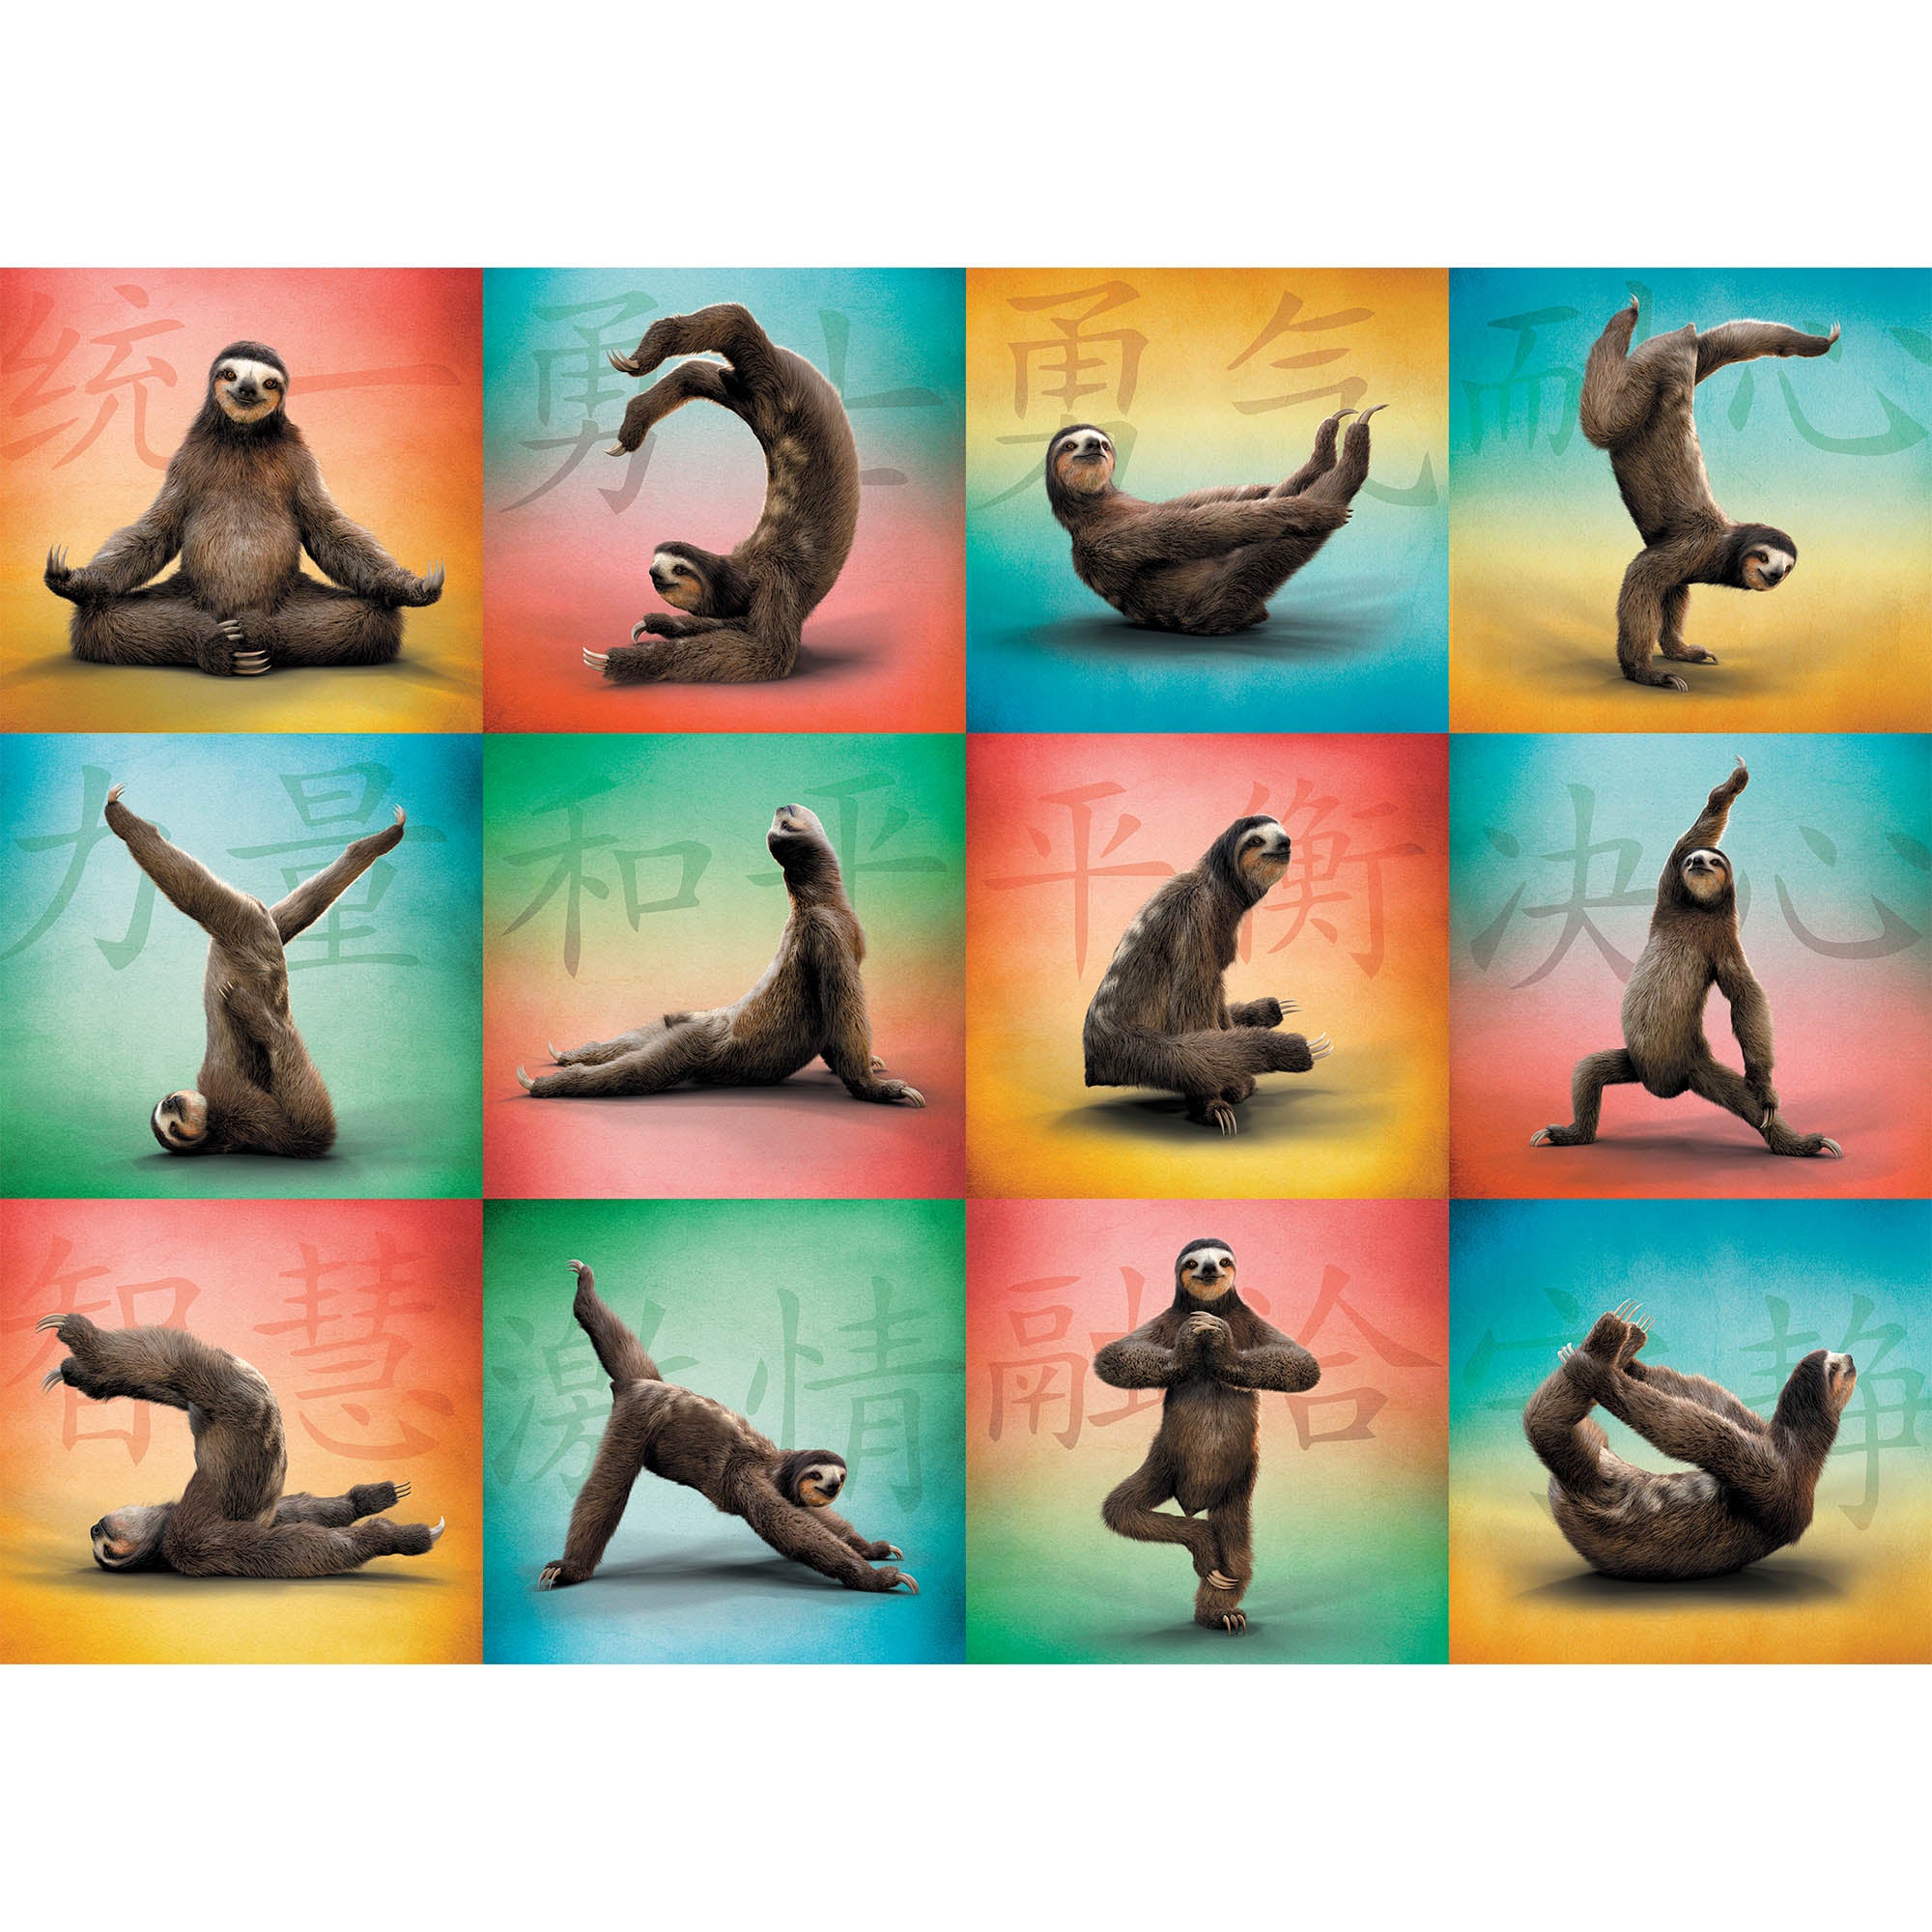 Colorful Creatures Puzzle - Sloth Yoga